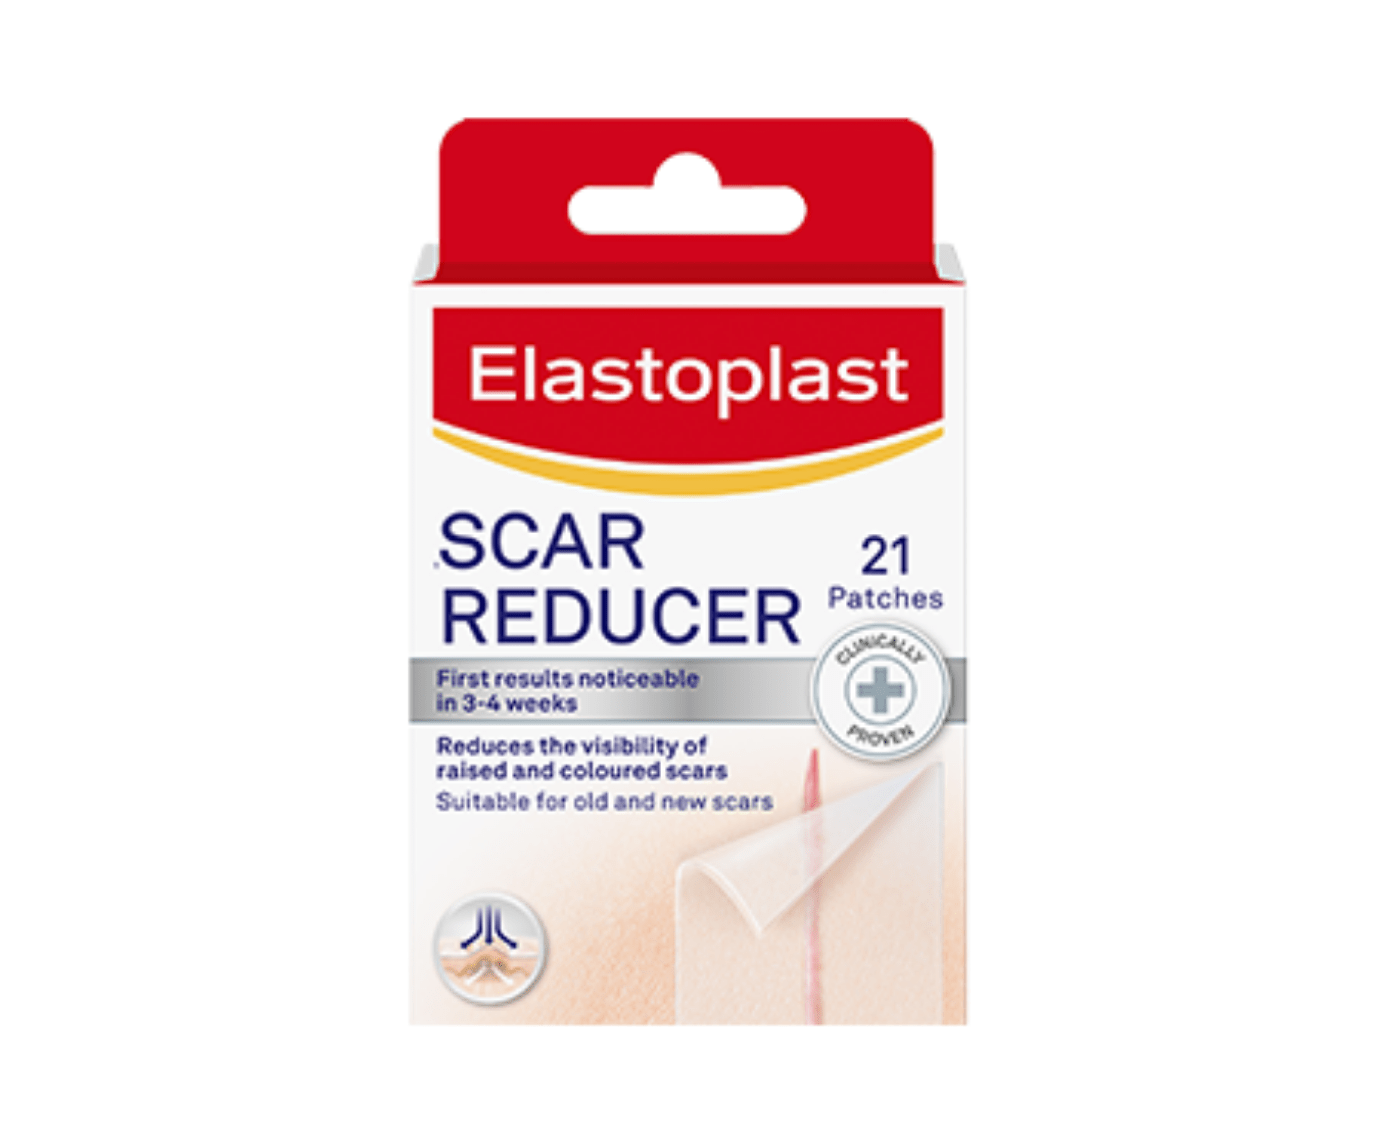 Packshot of Elastoplast Scar Reducer